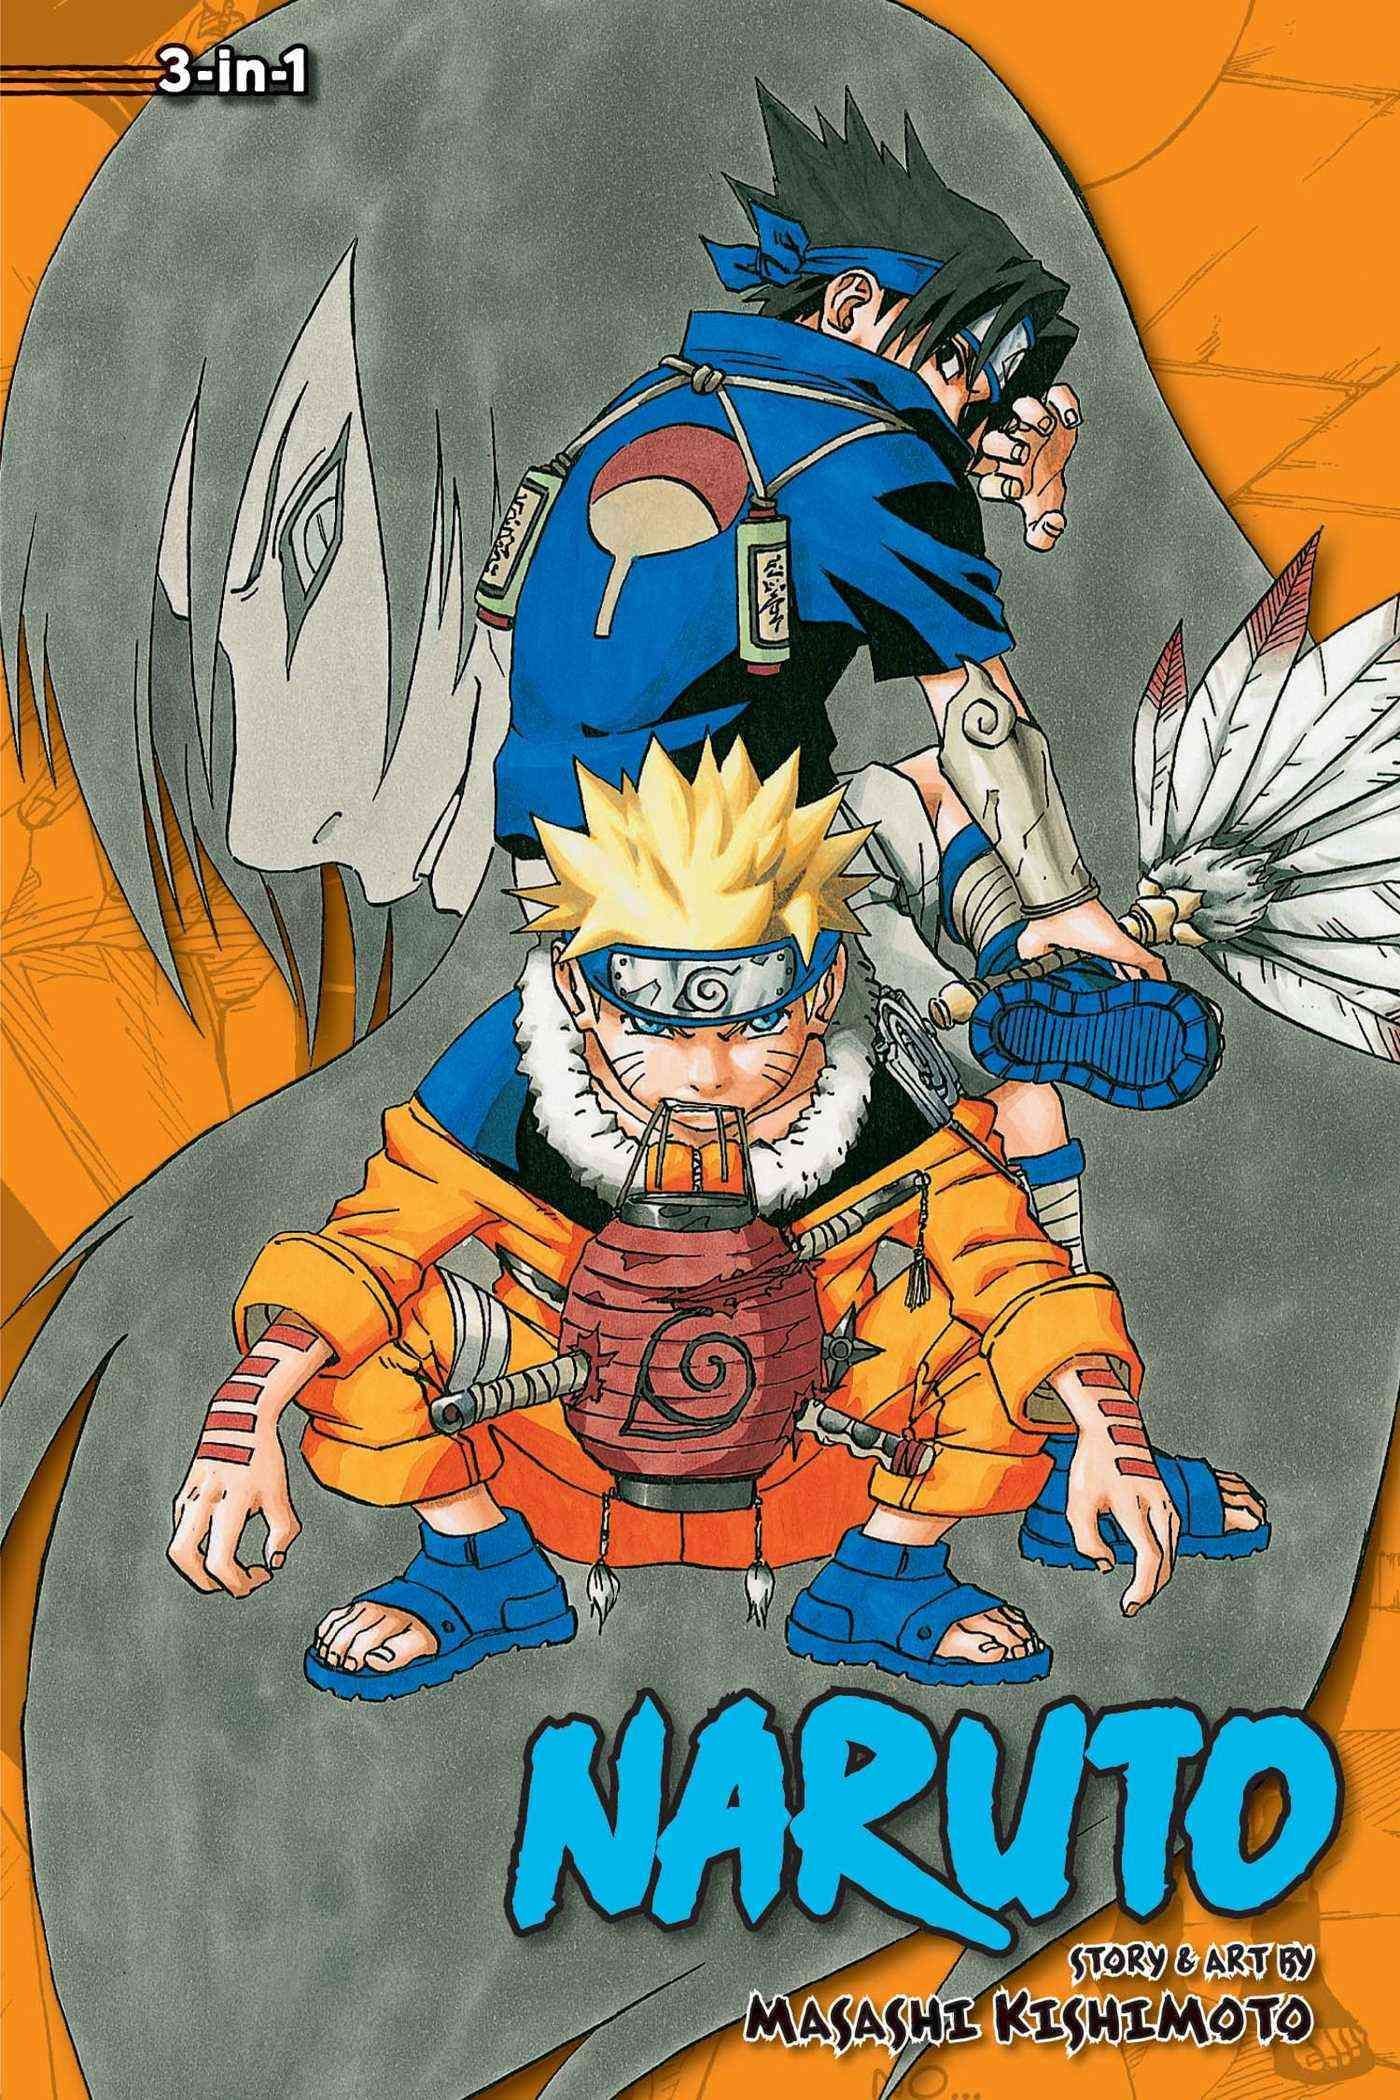 Naruto, Vol. 4 Paperback Masashi Kishimoto Hero's Bridge Anime Illustrated  Book | eBay